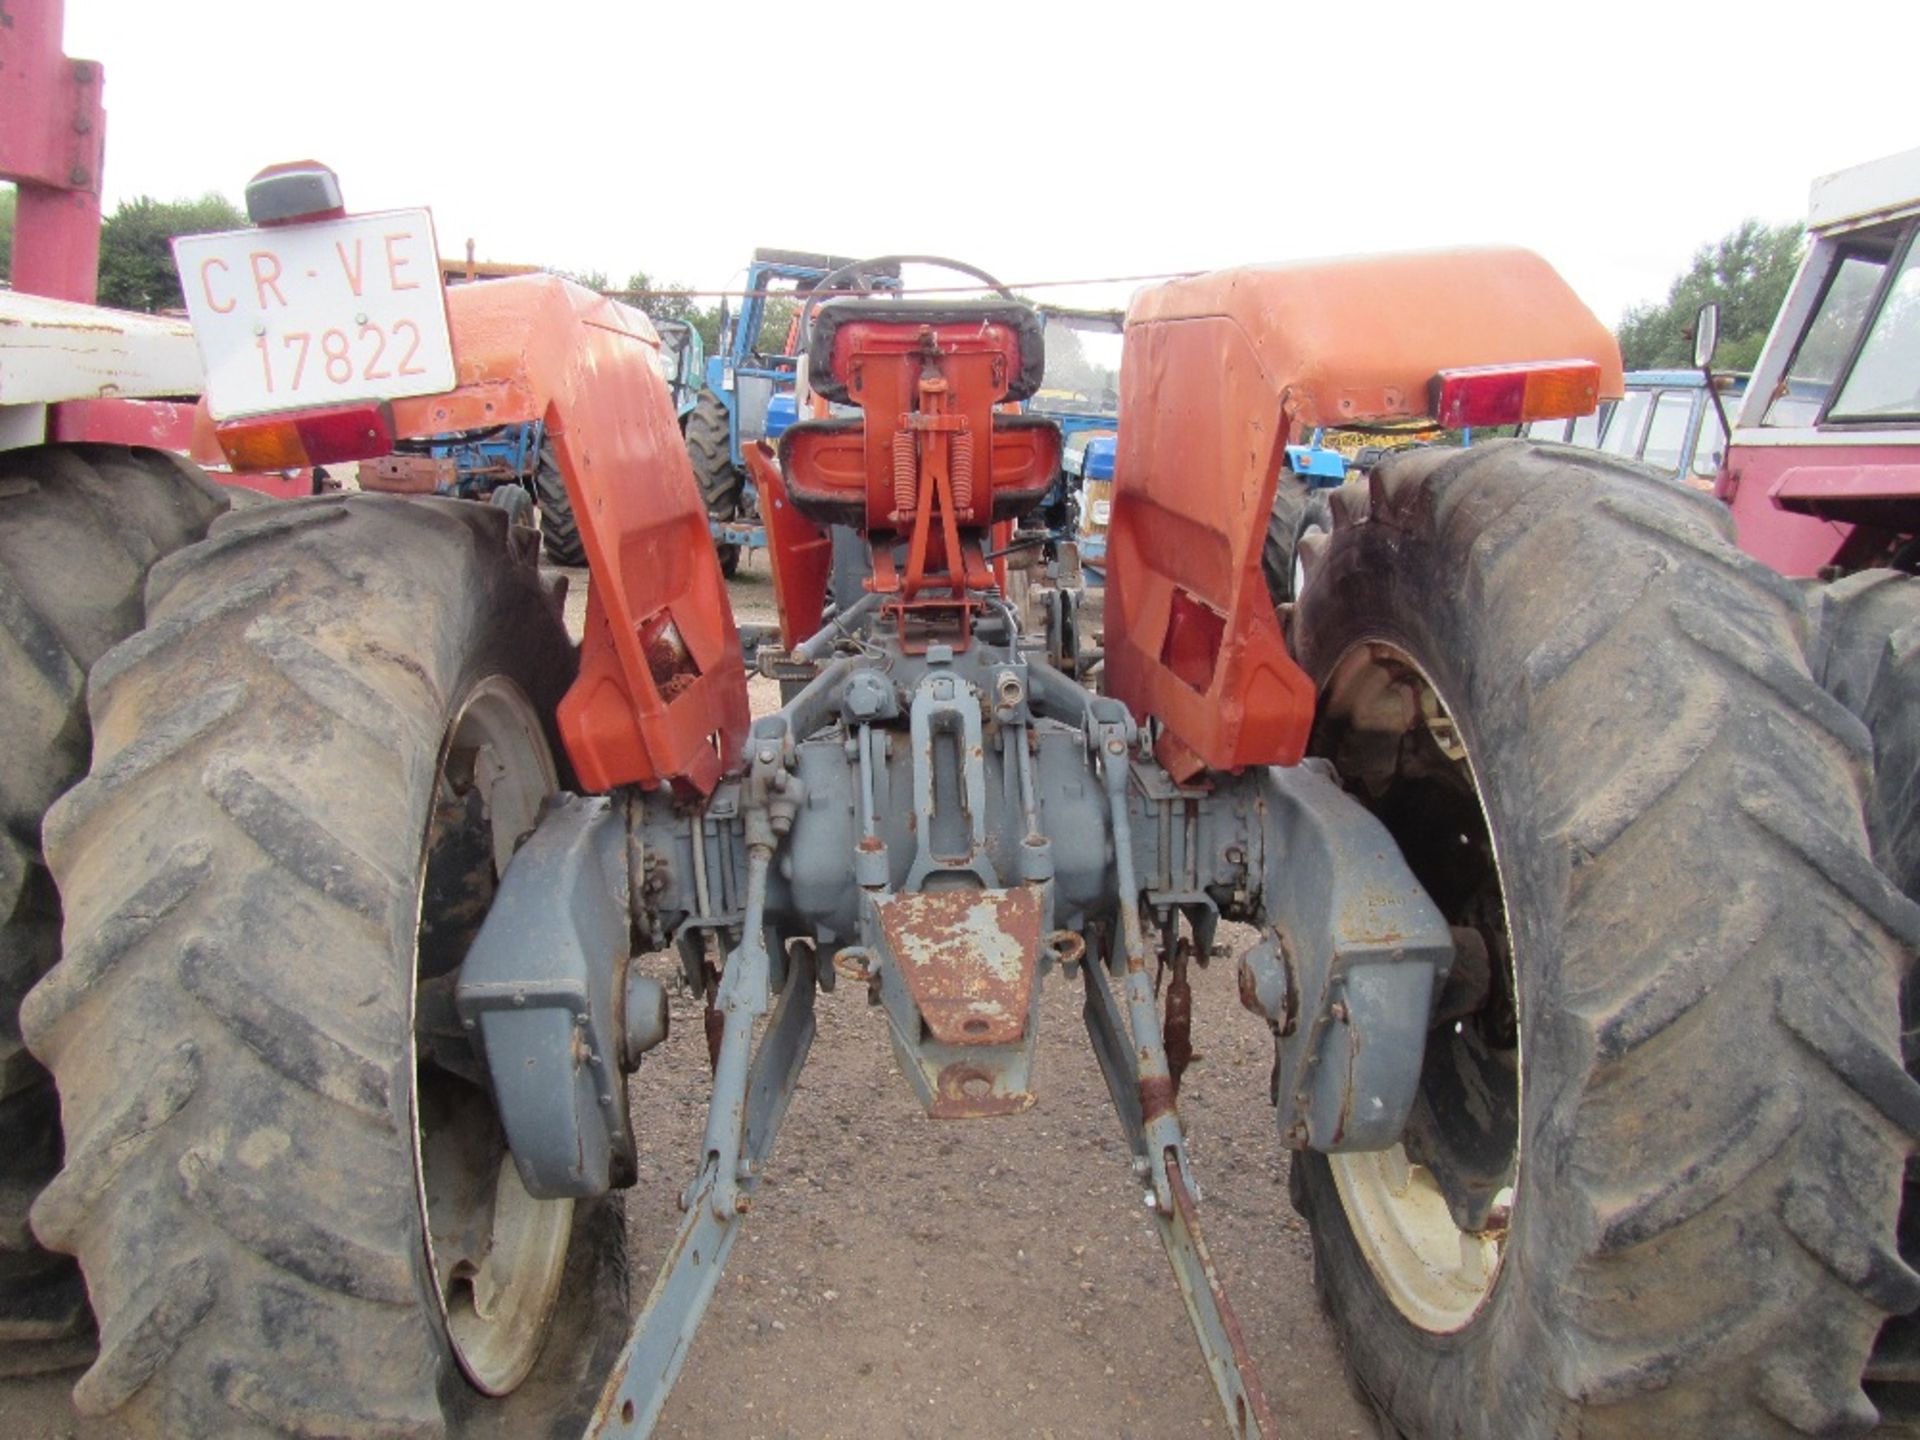 Massey Ferguson 165 Tractor. Ser. No. 146472 - Image 3 of 4